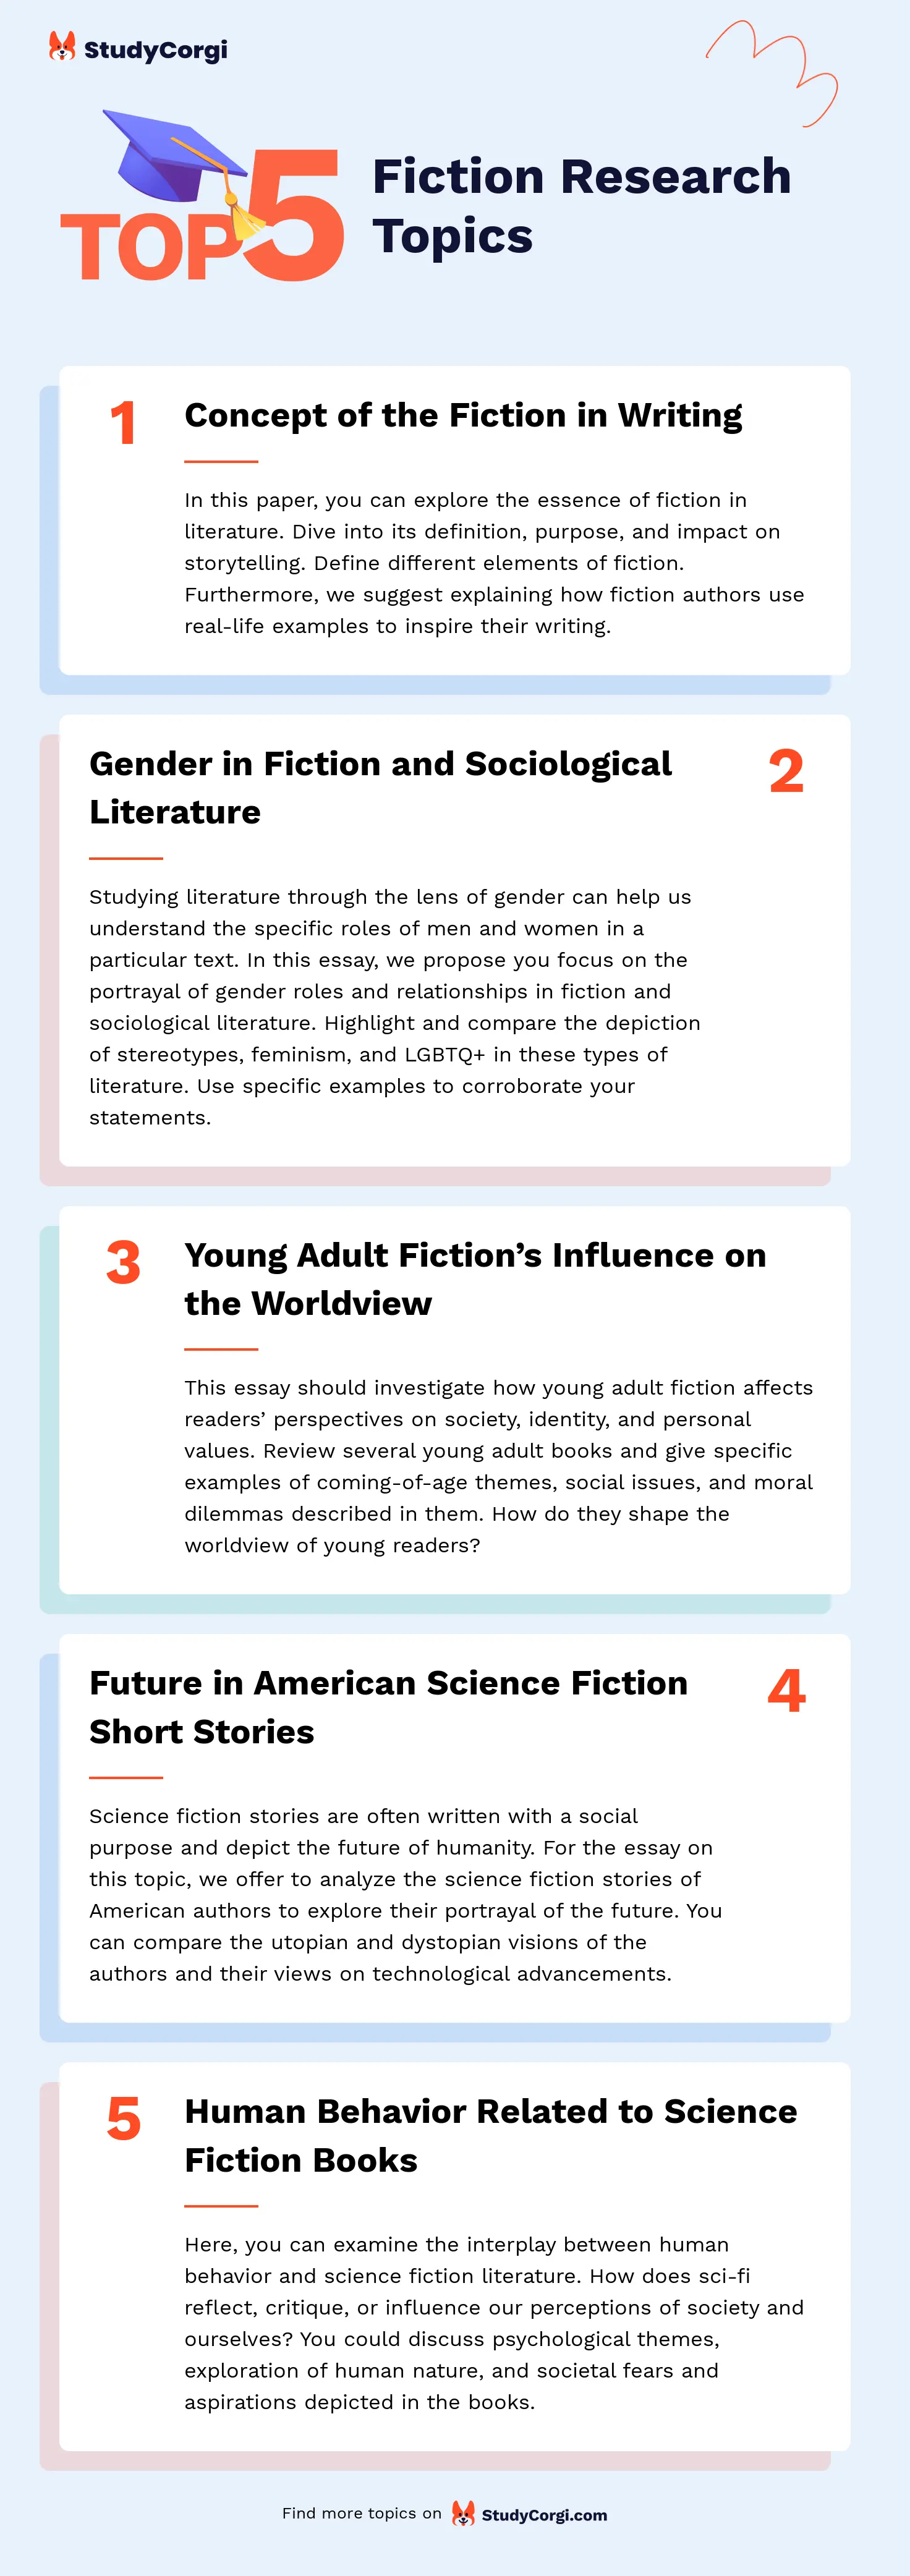 TOP-5 Fiction Research Topics